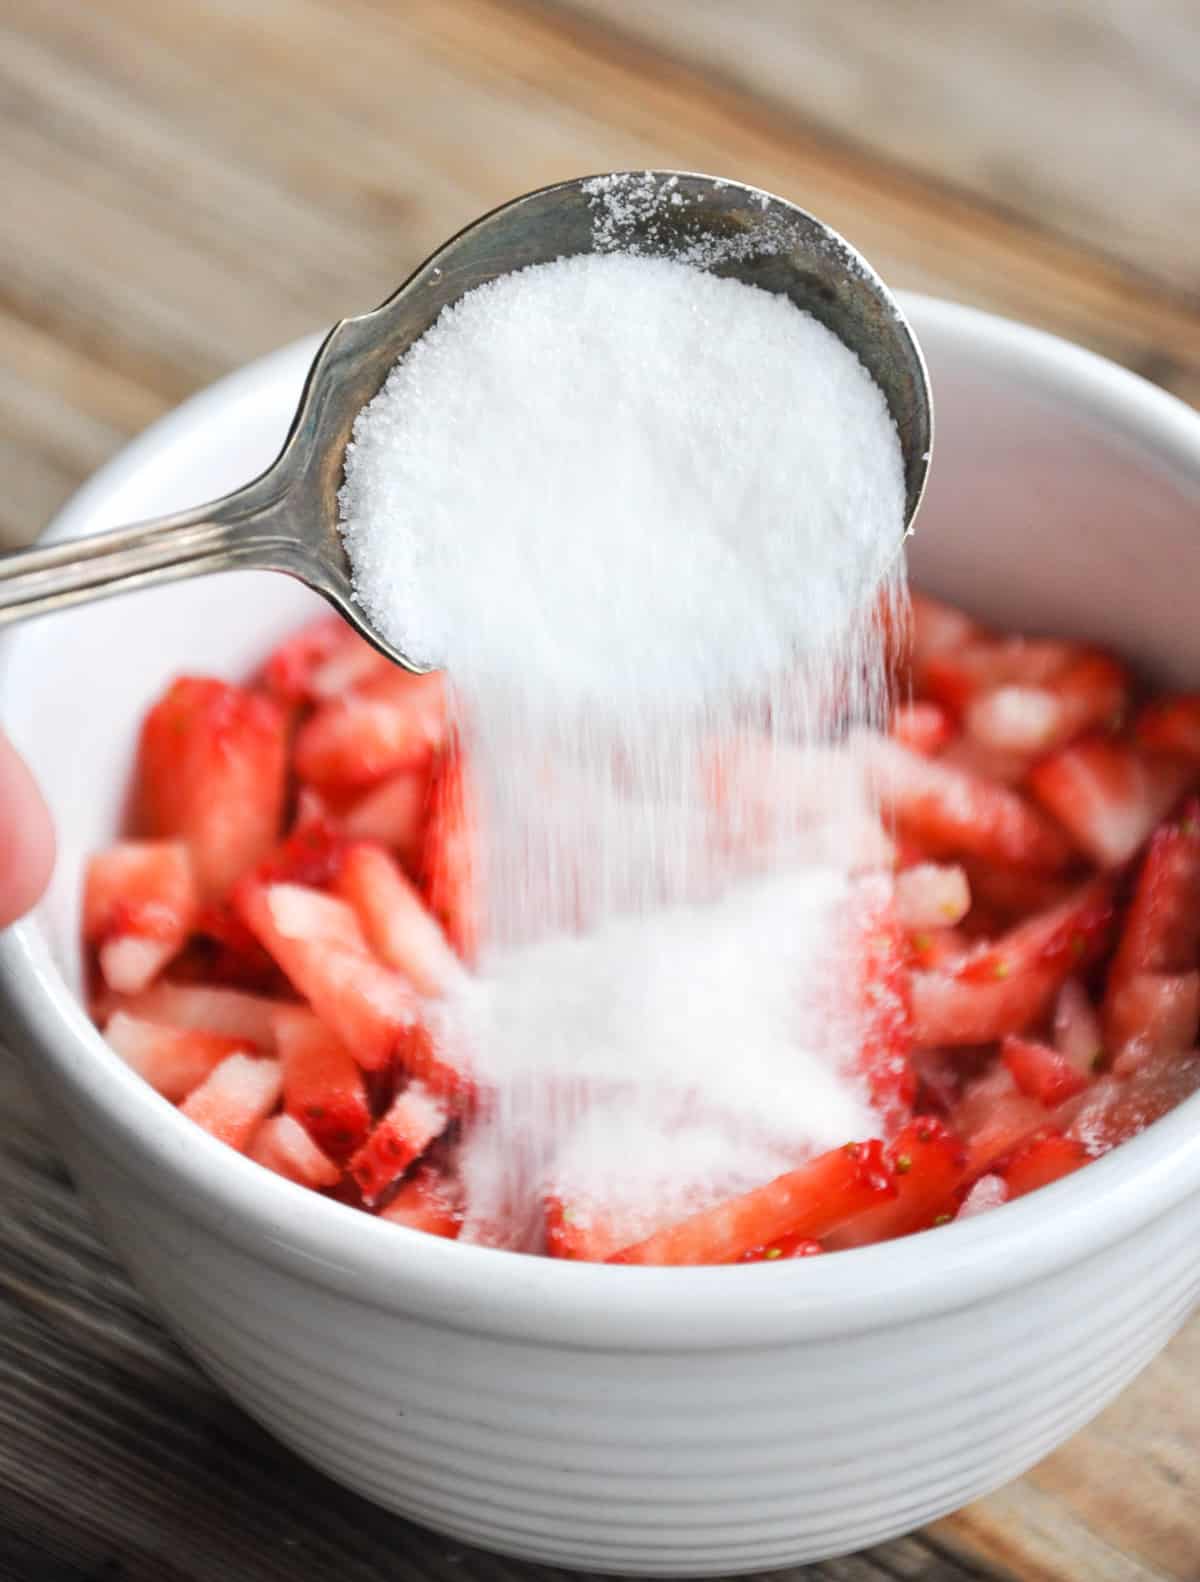 Sugar added to strawberries 